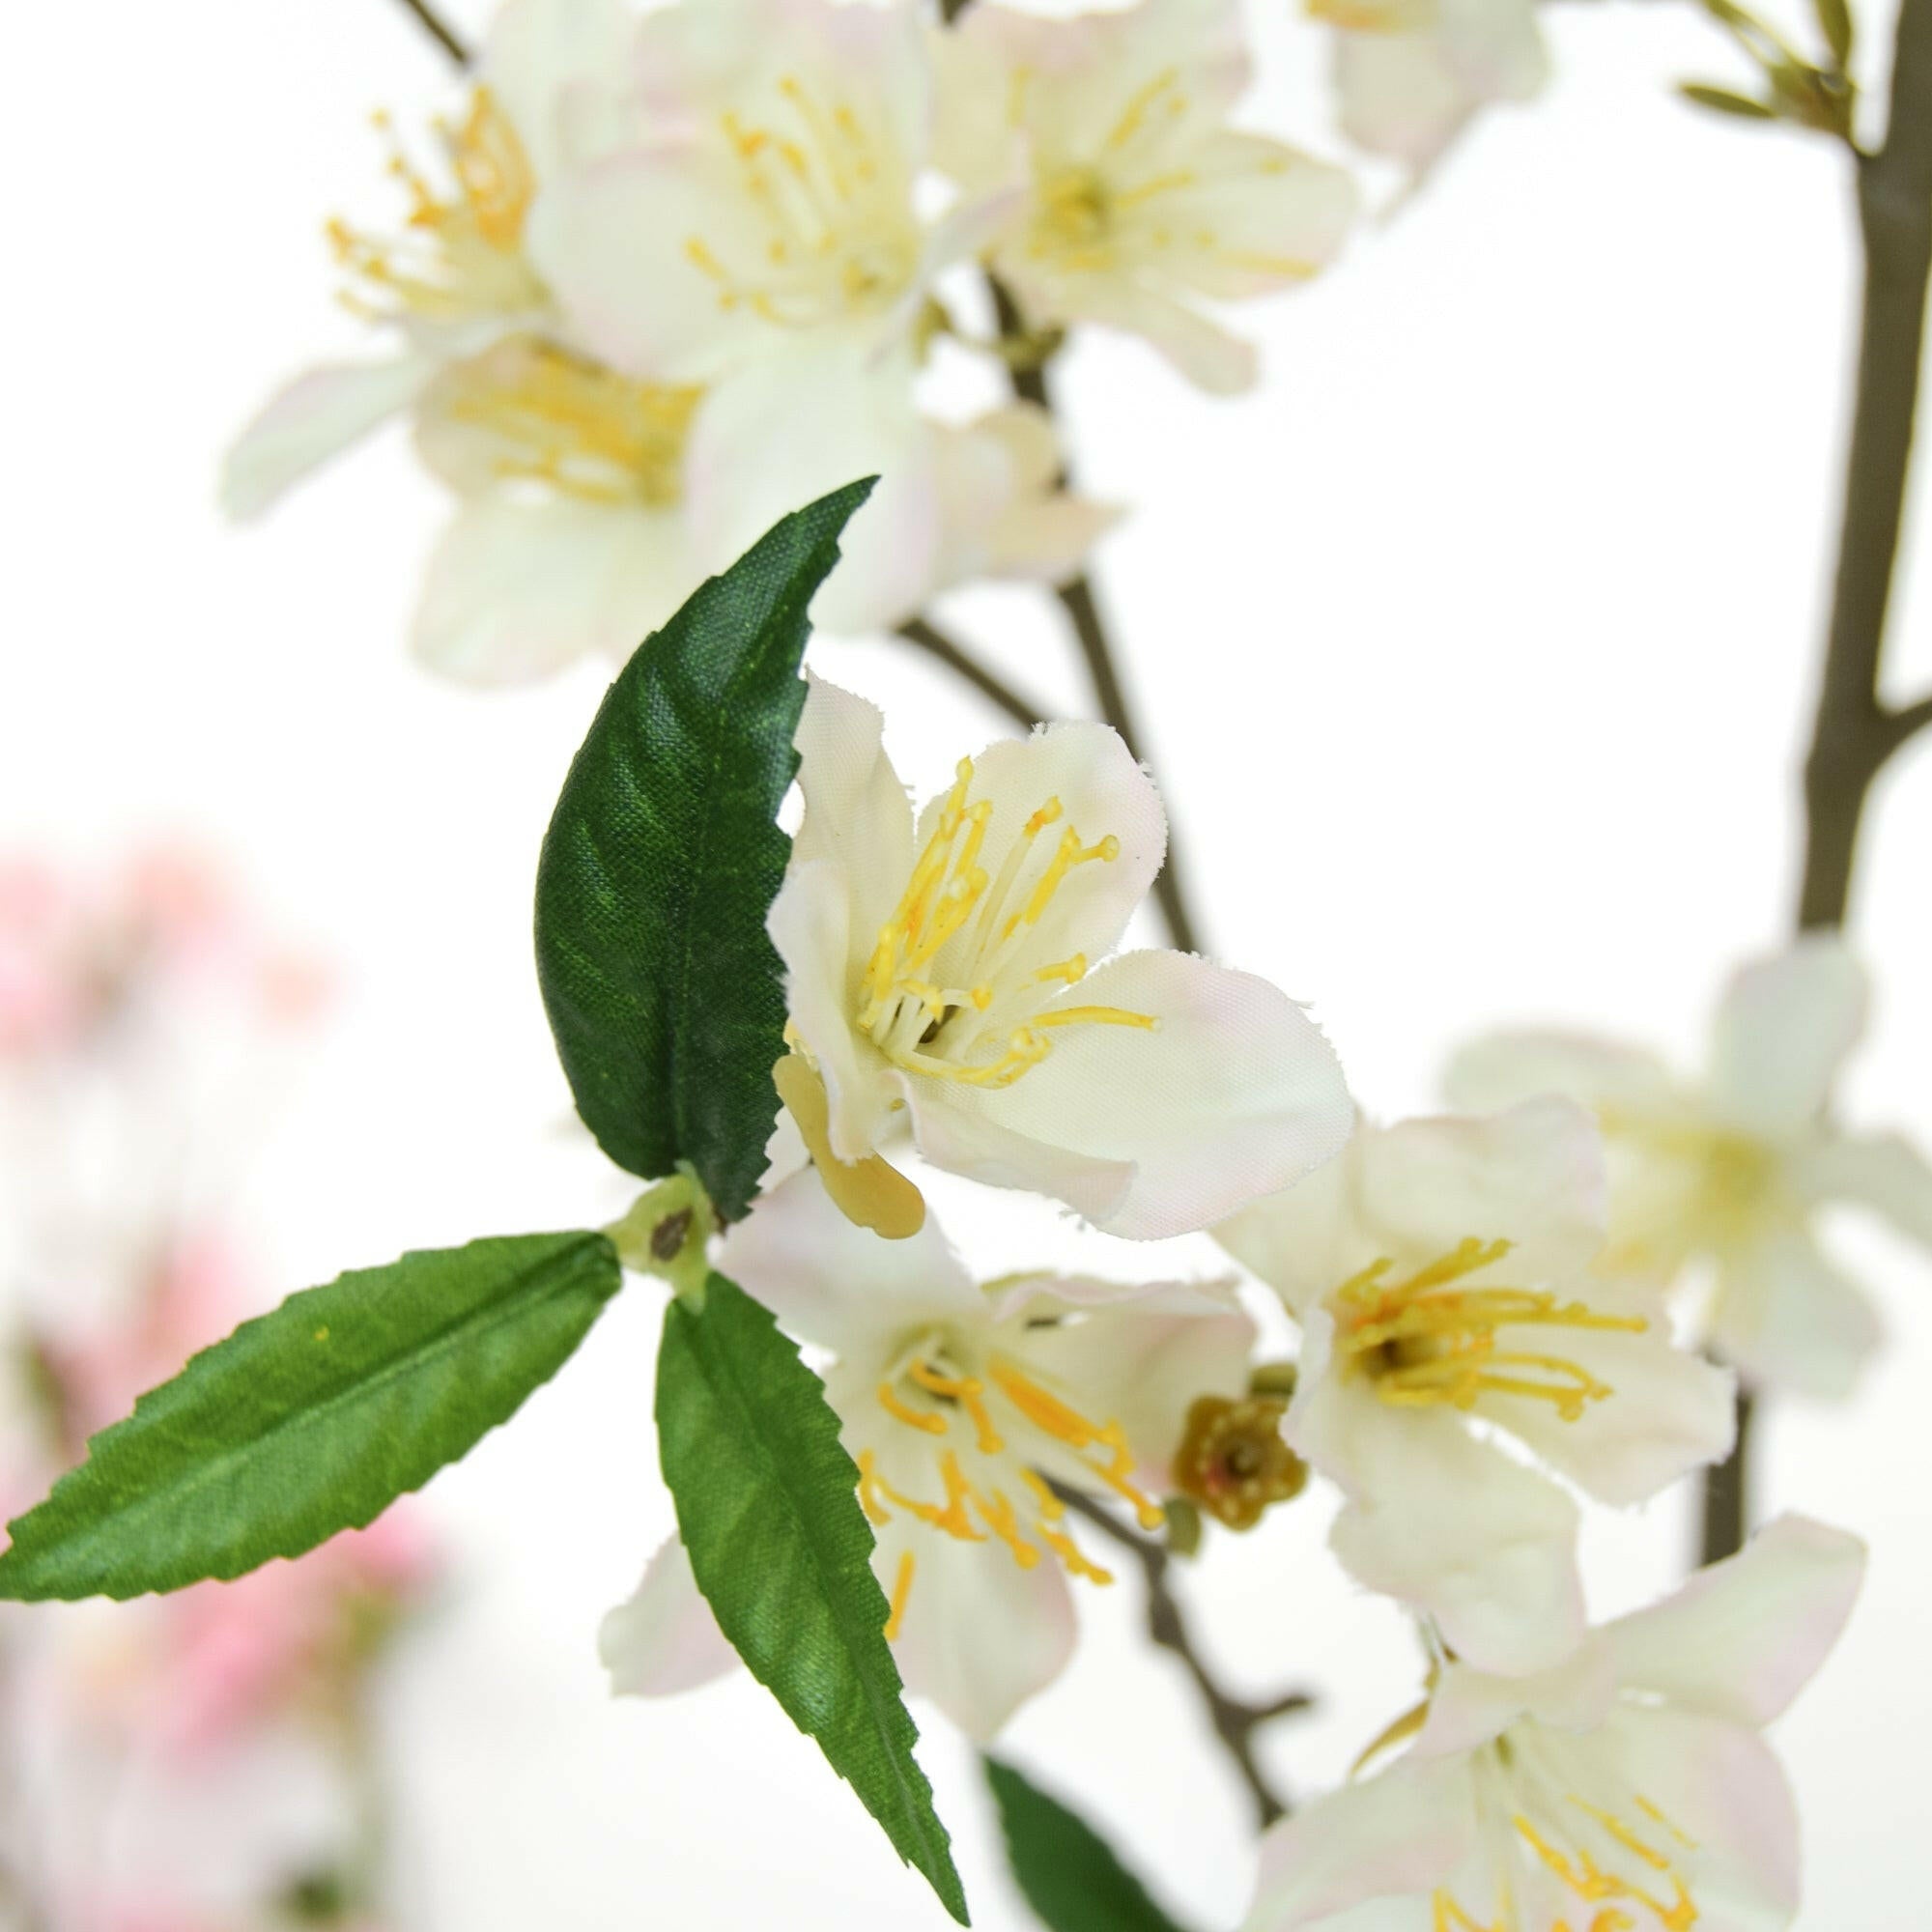 Artificial Silk Cherry Blossom Branch FR